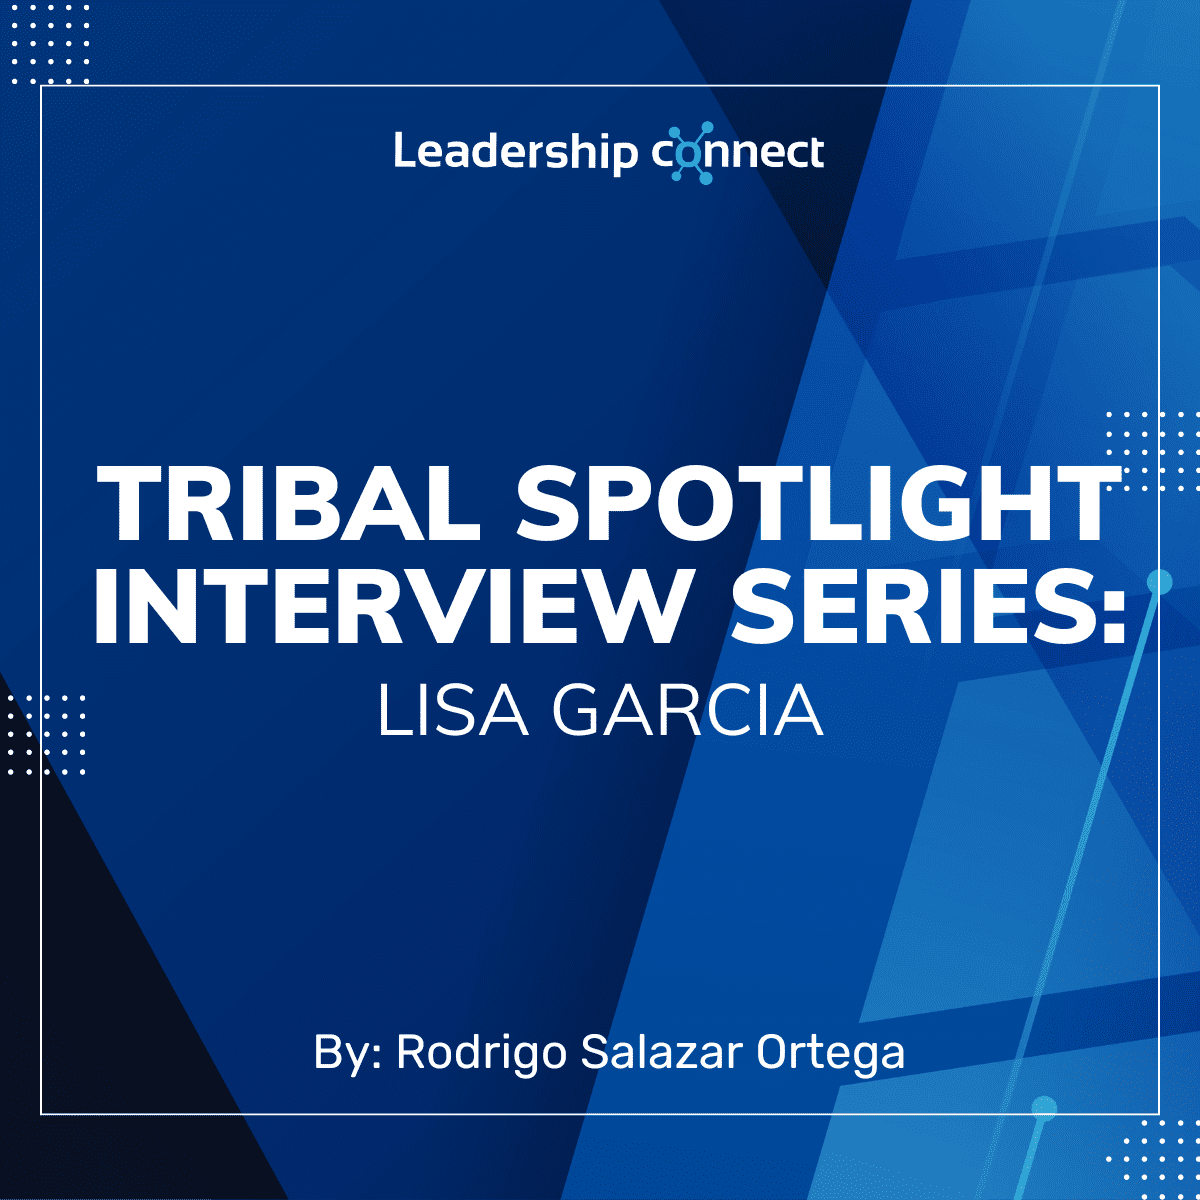 Tribal Spotlight Interview Series with Lisa Garcia